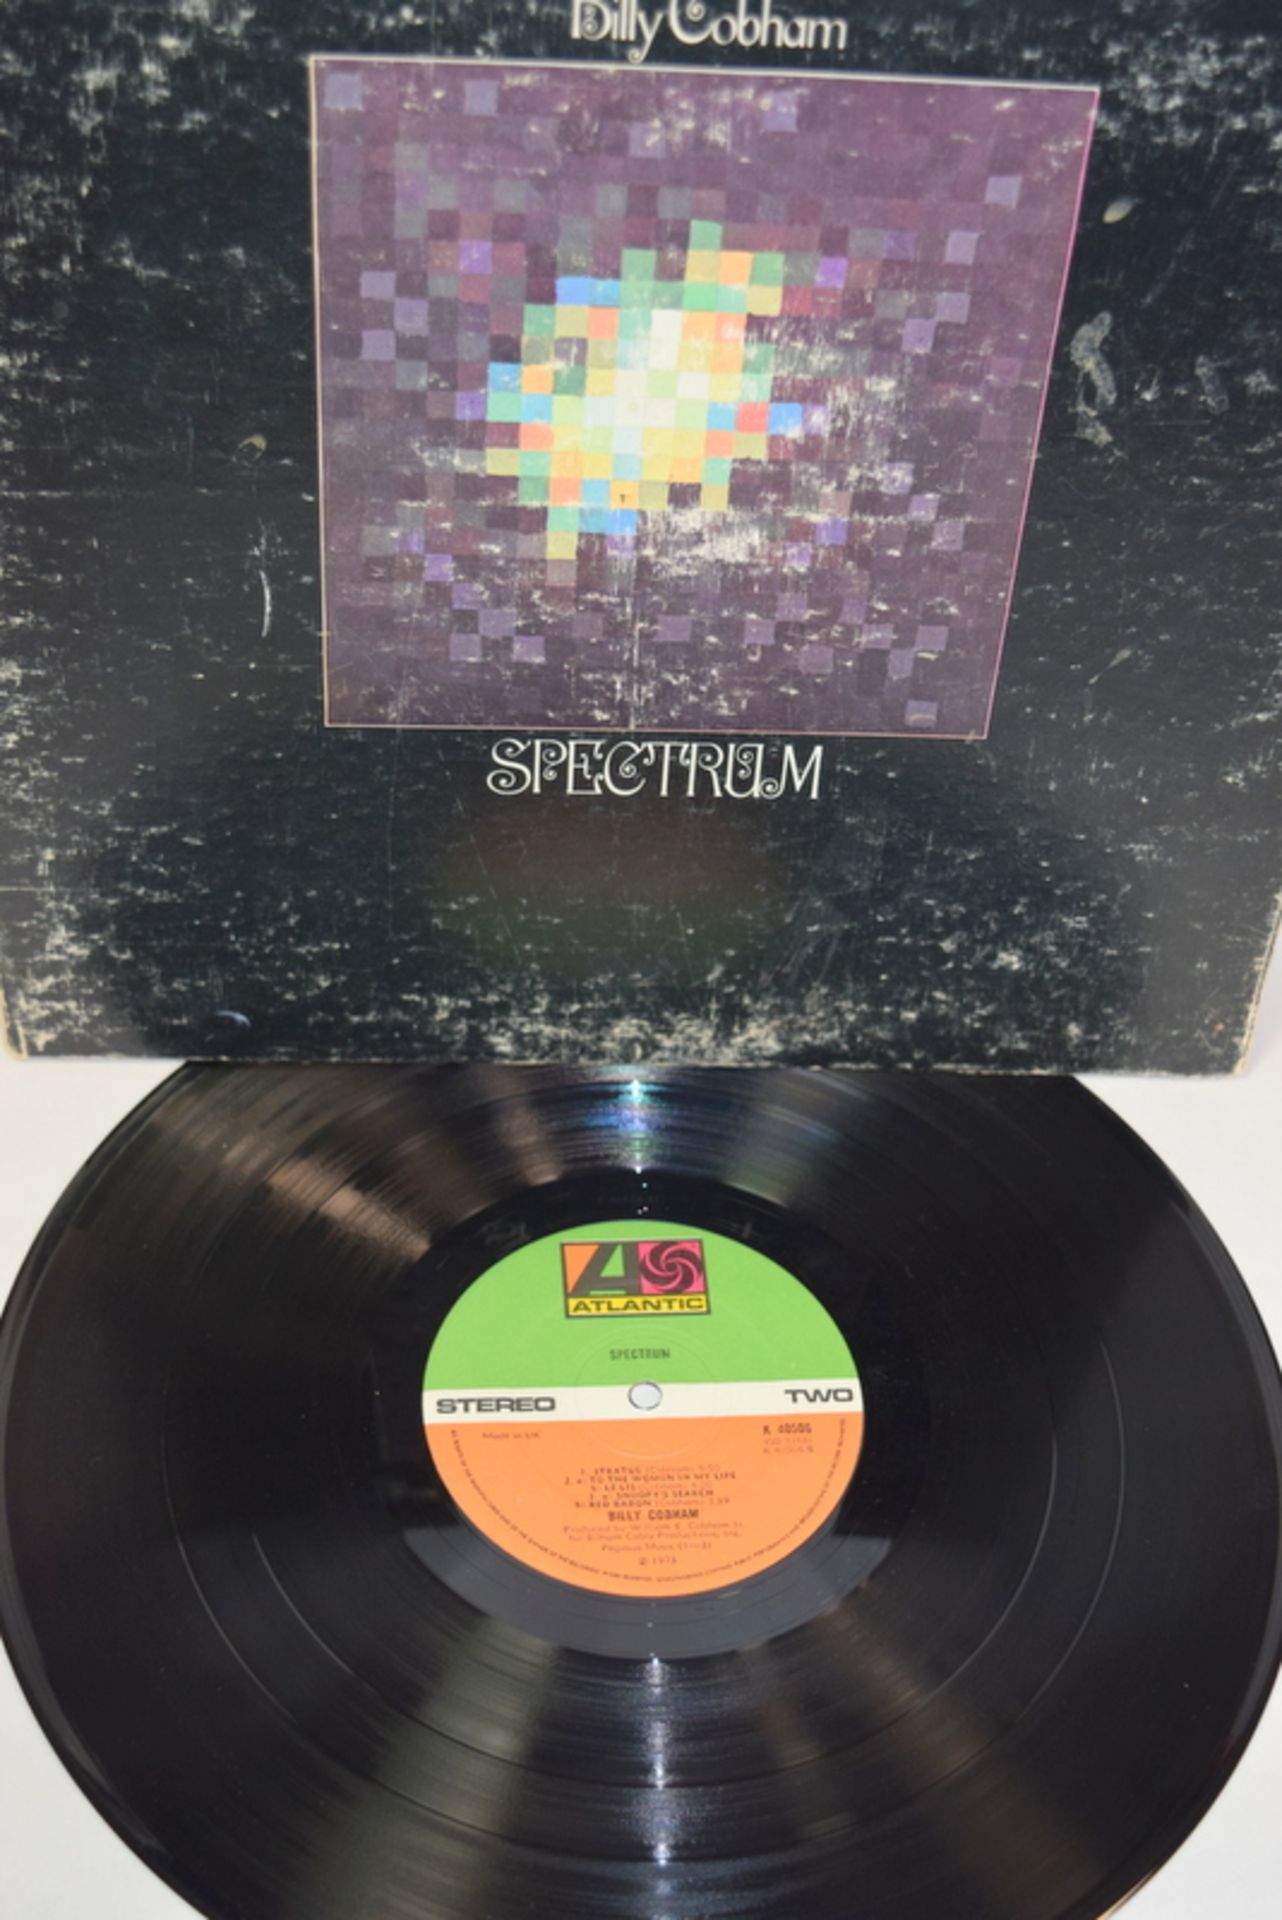 Billy Cobham Vinyl LP Spectrum